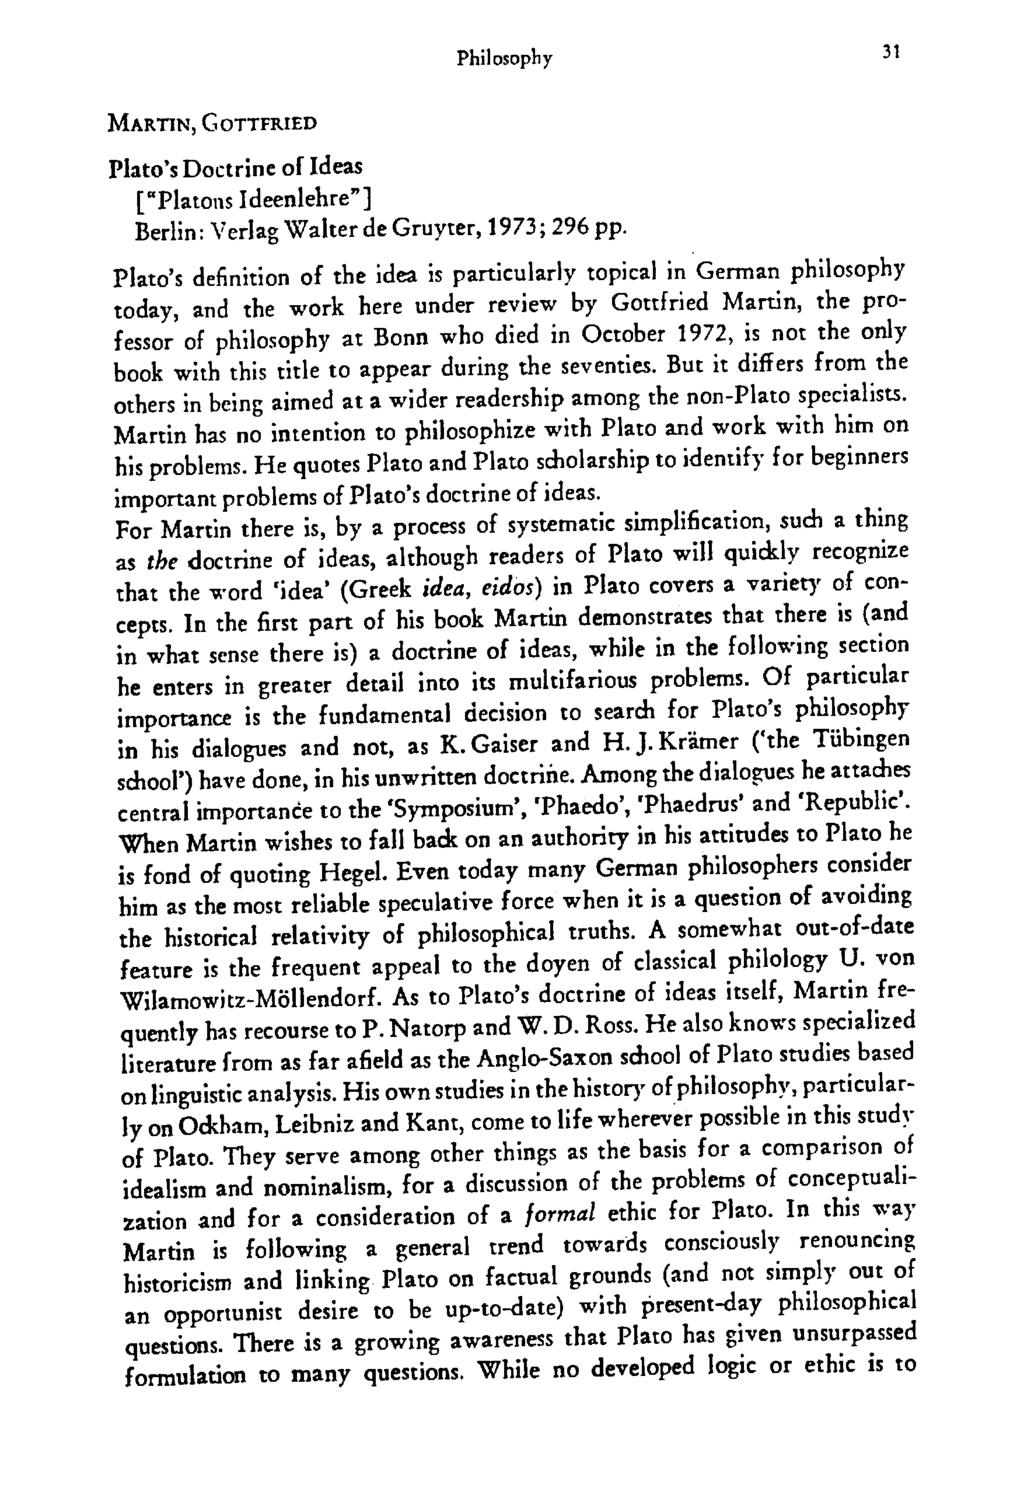 Philosophy 31 MARTIN, GOTTFRIED Plato's Doctrine of Ideas ["PlatonsIdeenlehre"] Berlin: Verlag Walter de Gruyter, 1973; 296 pp.